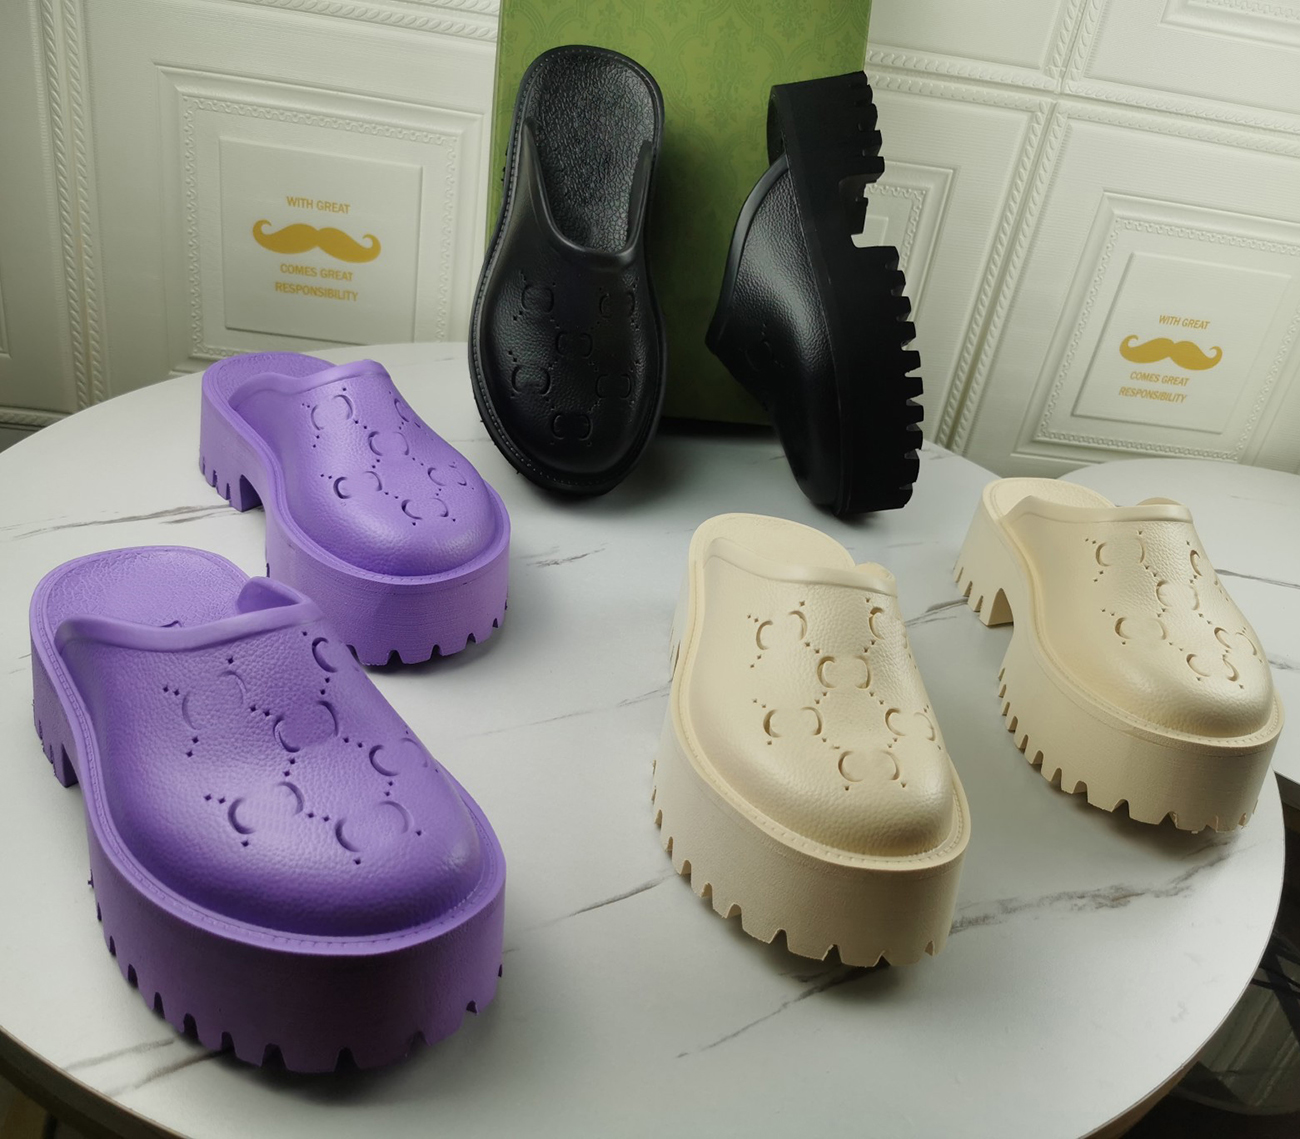 Brand Perforated Slippers Men Women Platform Designer Sandals Wedge Rubber Cut-out Slide Transparent Materials Fashion Beach Flats Shoes